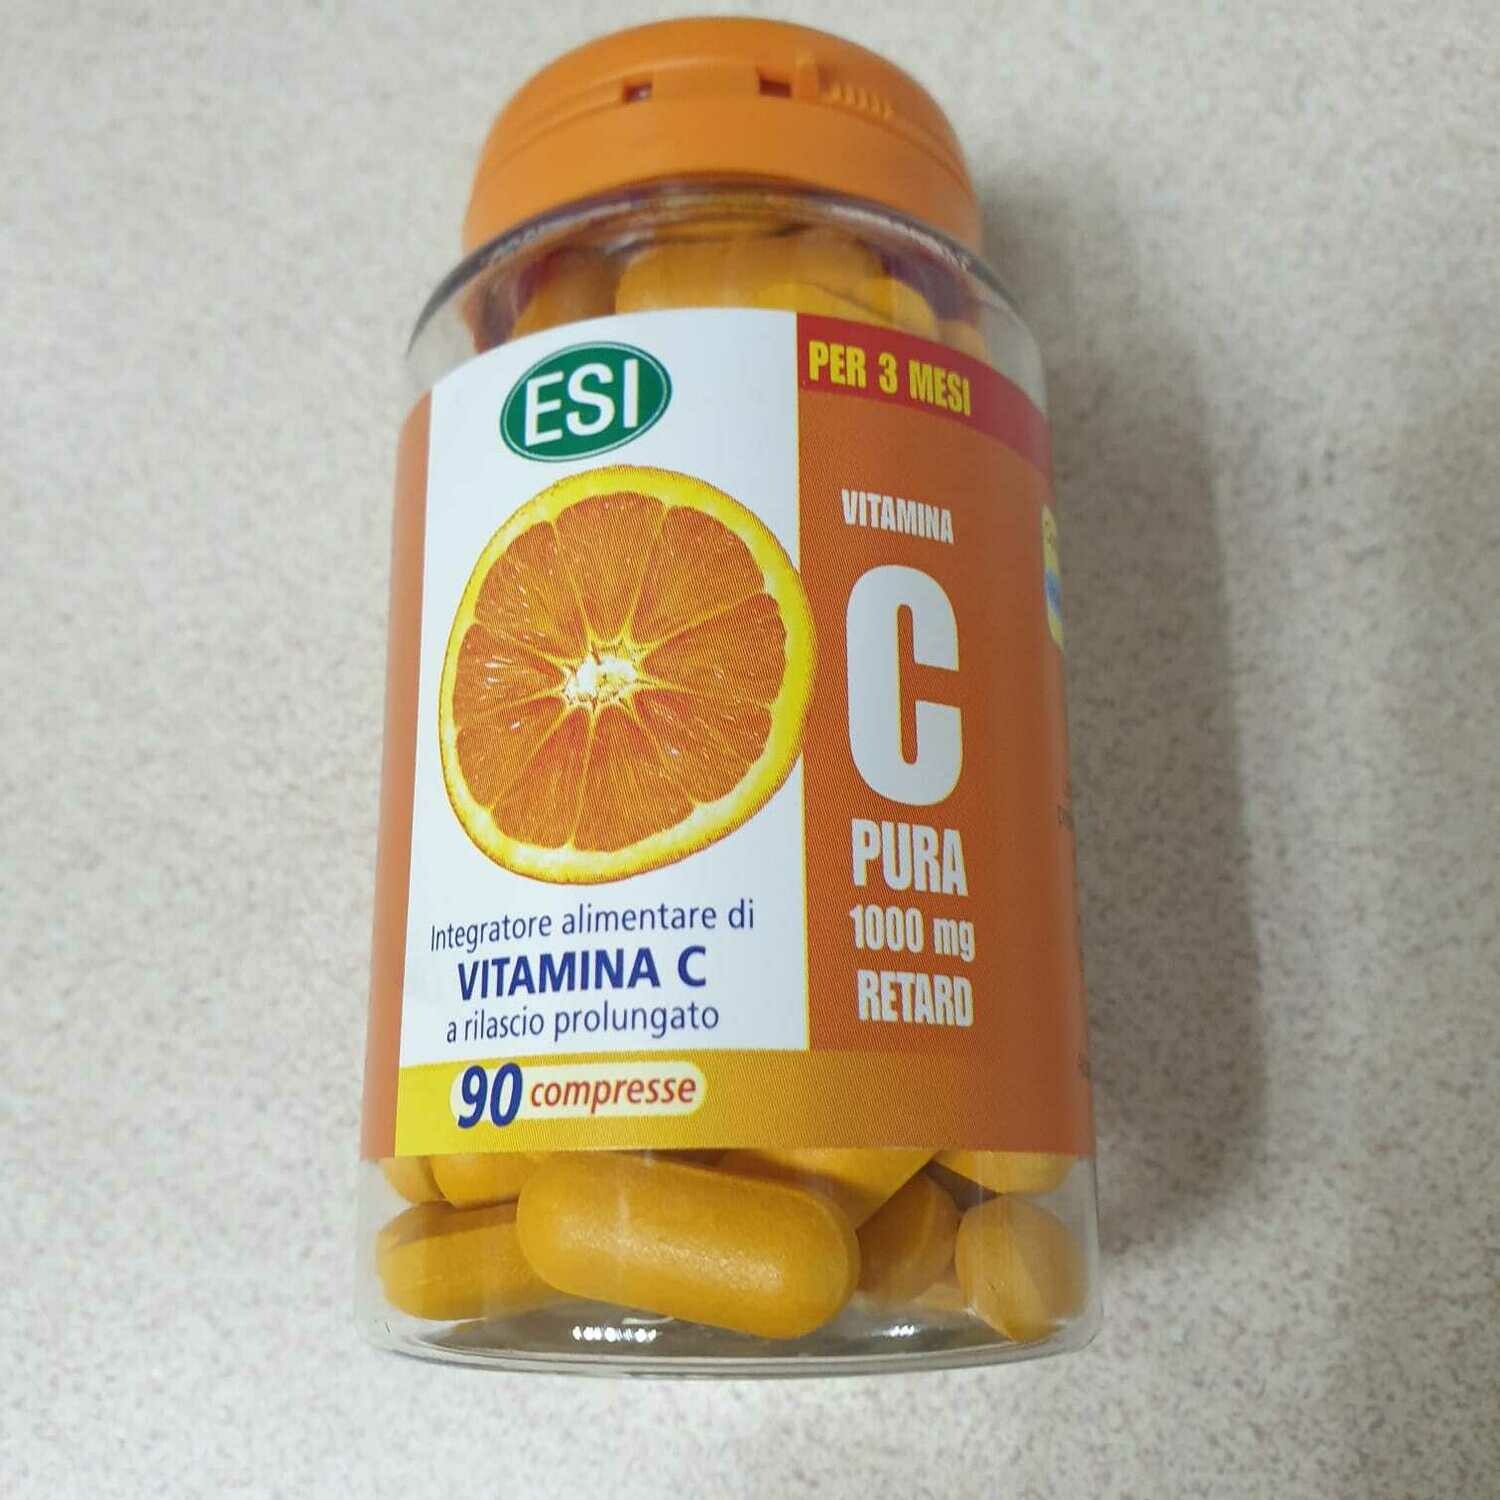 ESI Pure Vitamin C Retard (90 tabs)